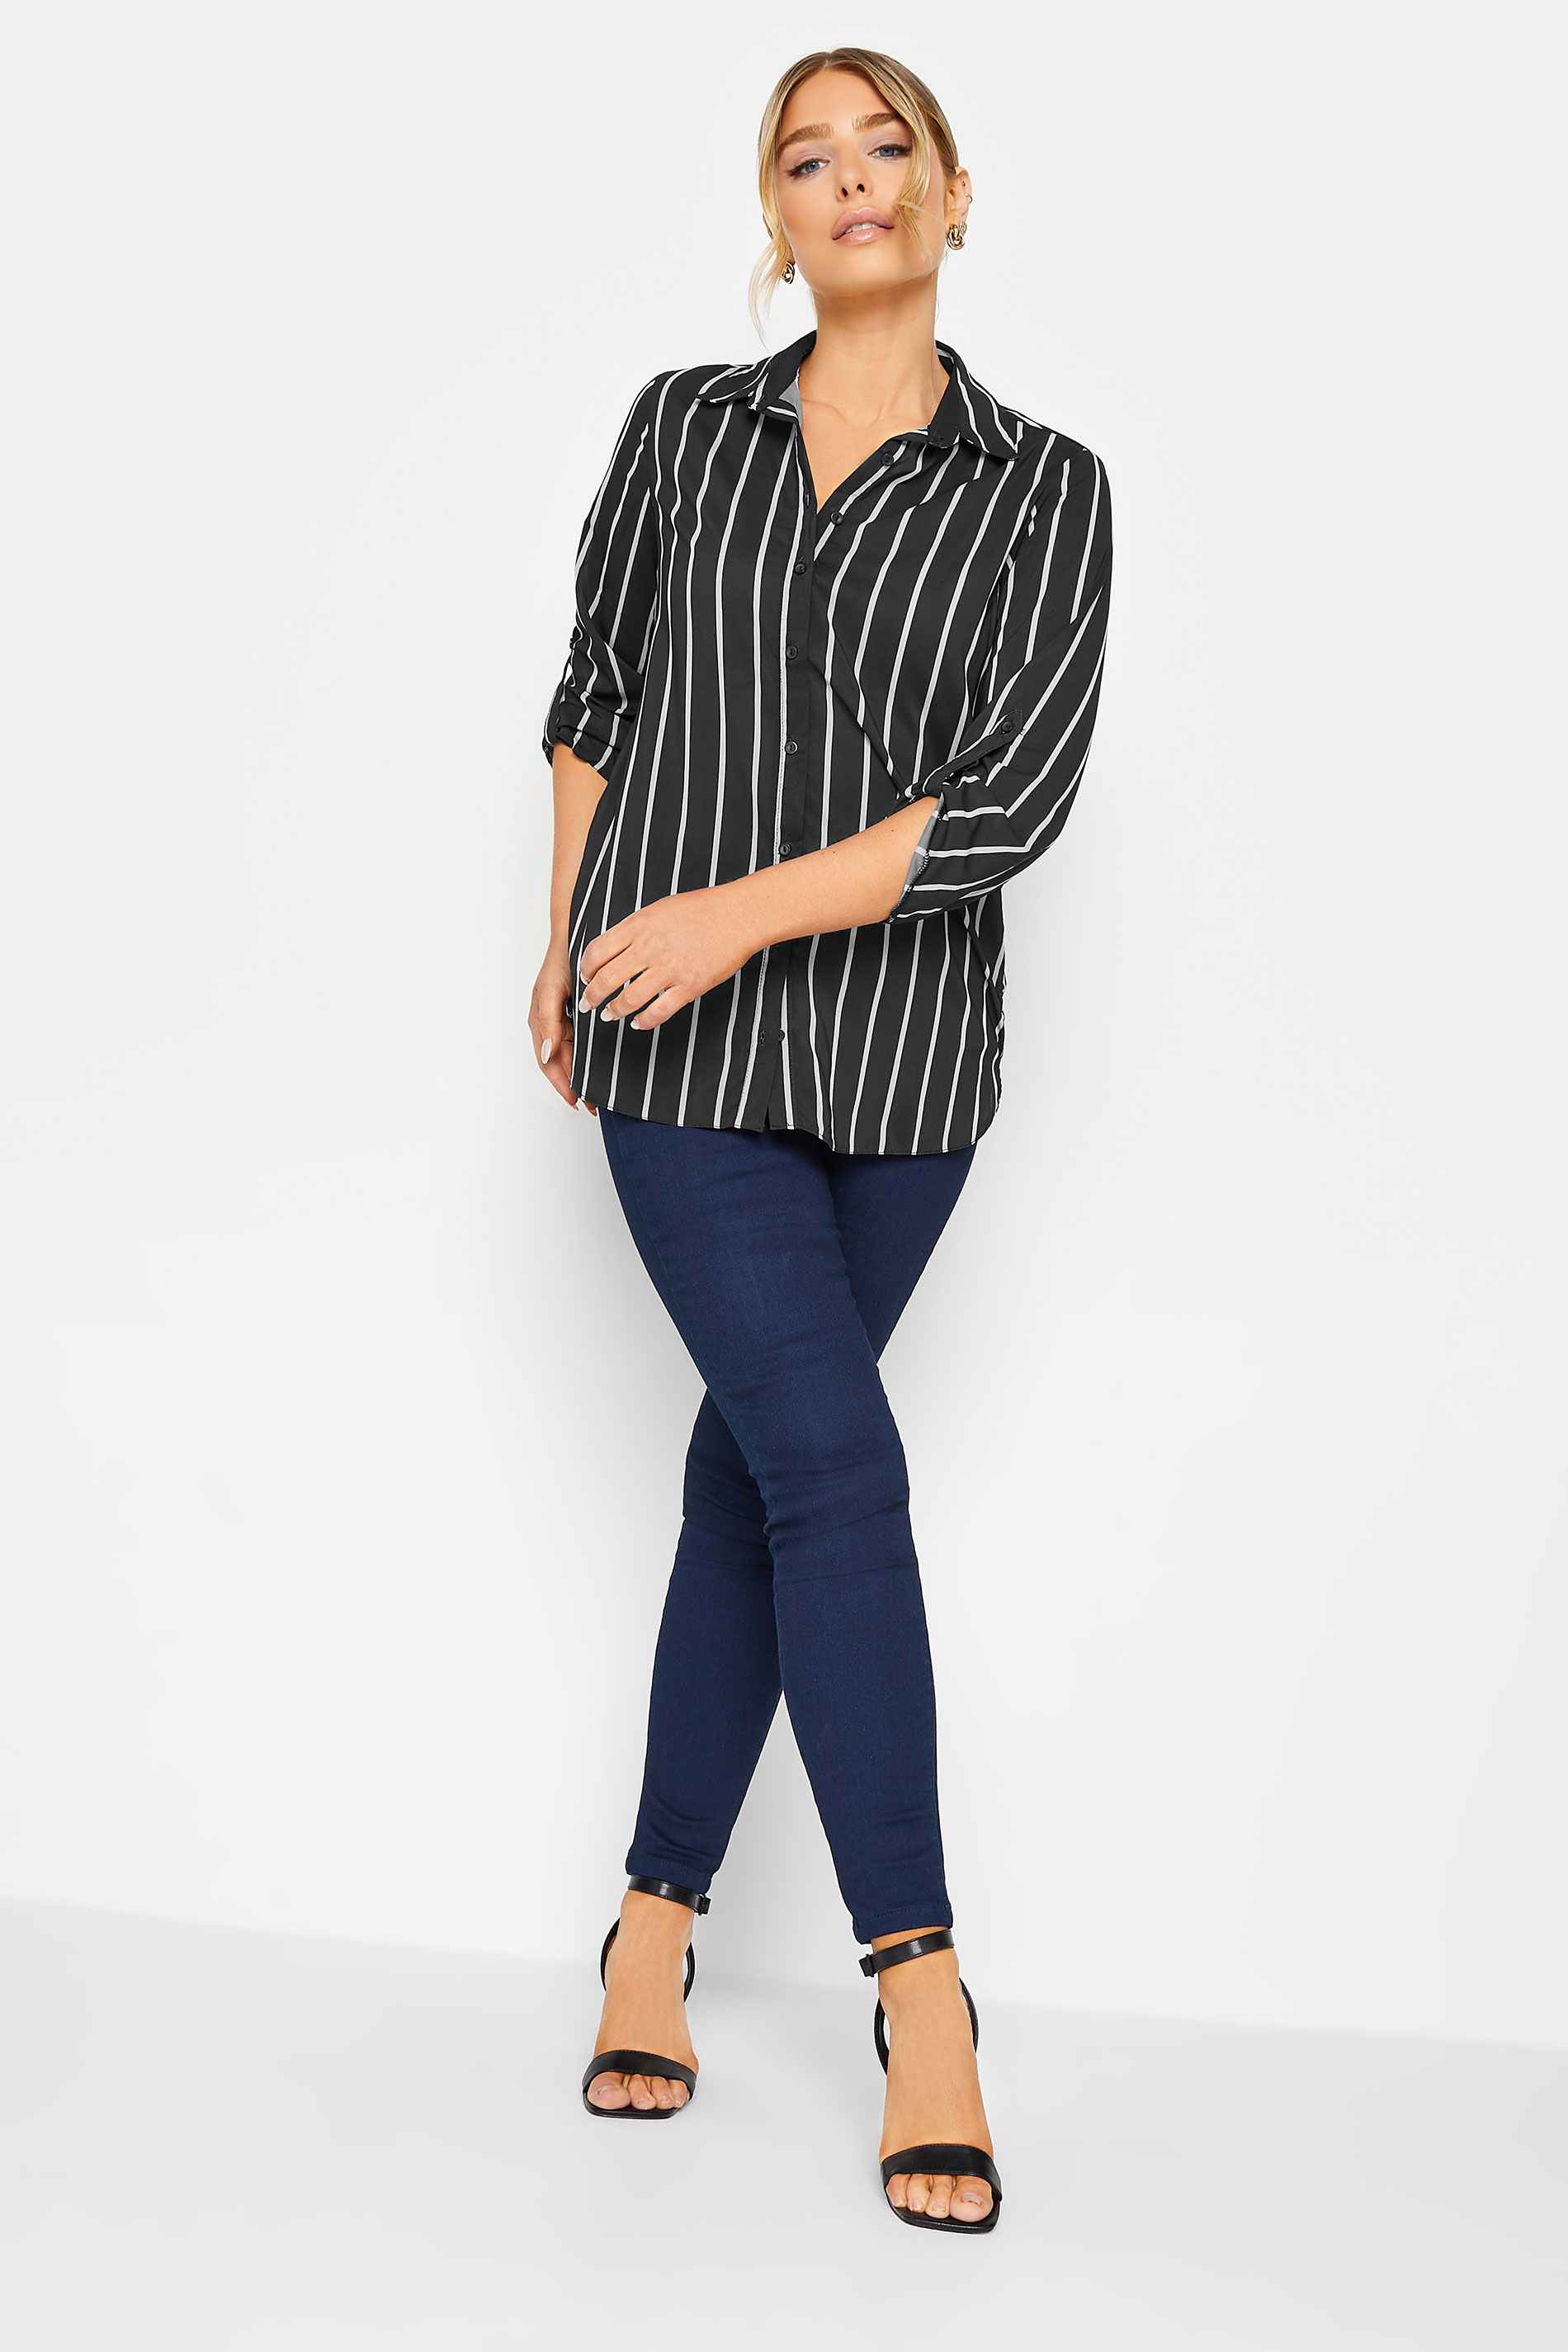 M&Co Black Stripe Long Sleeve Shirt | M&Co 2